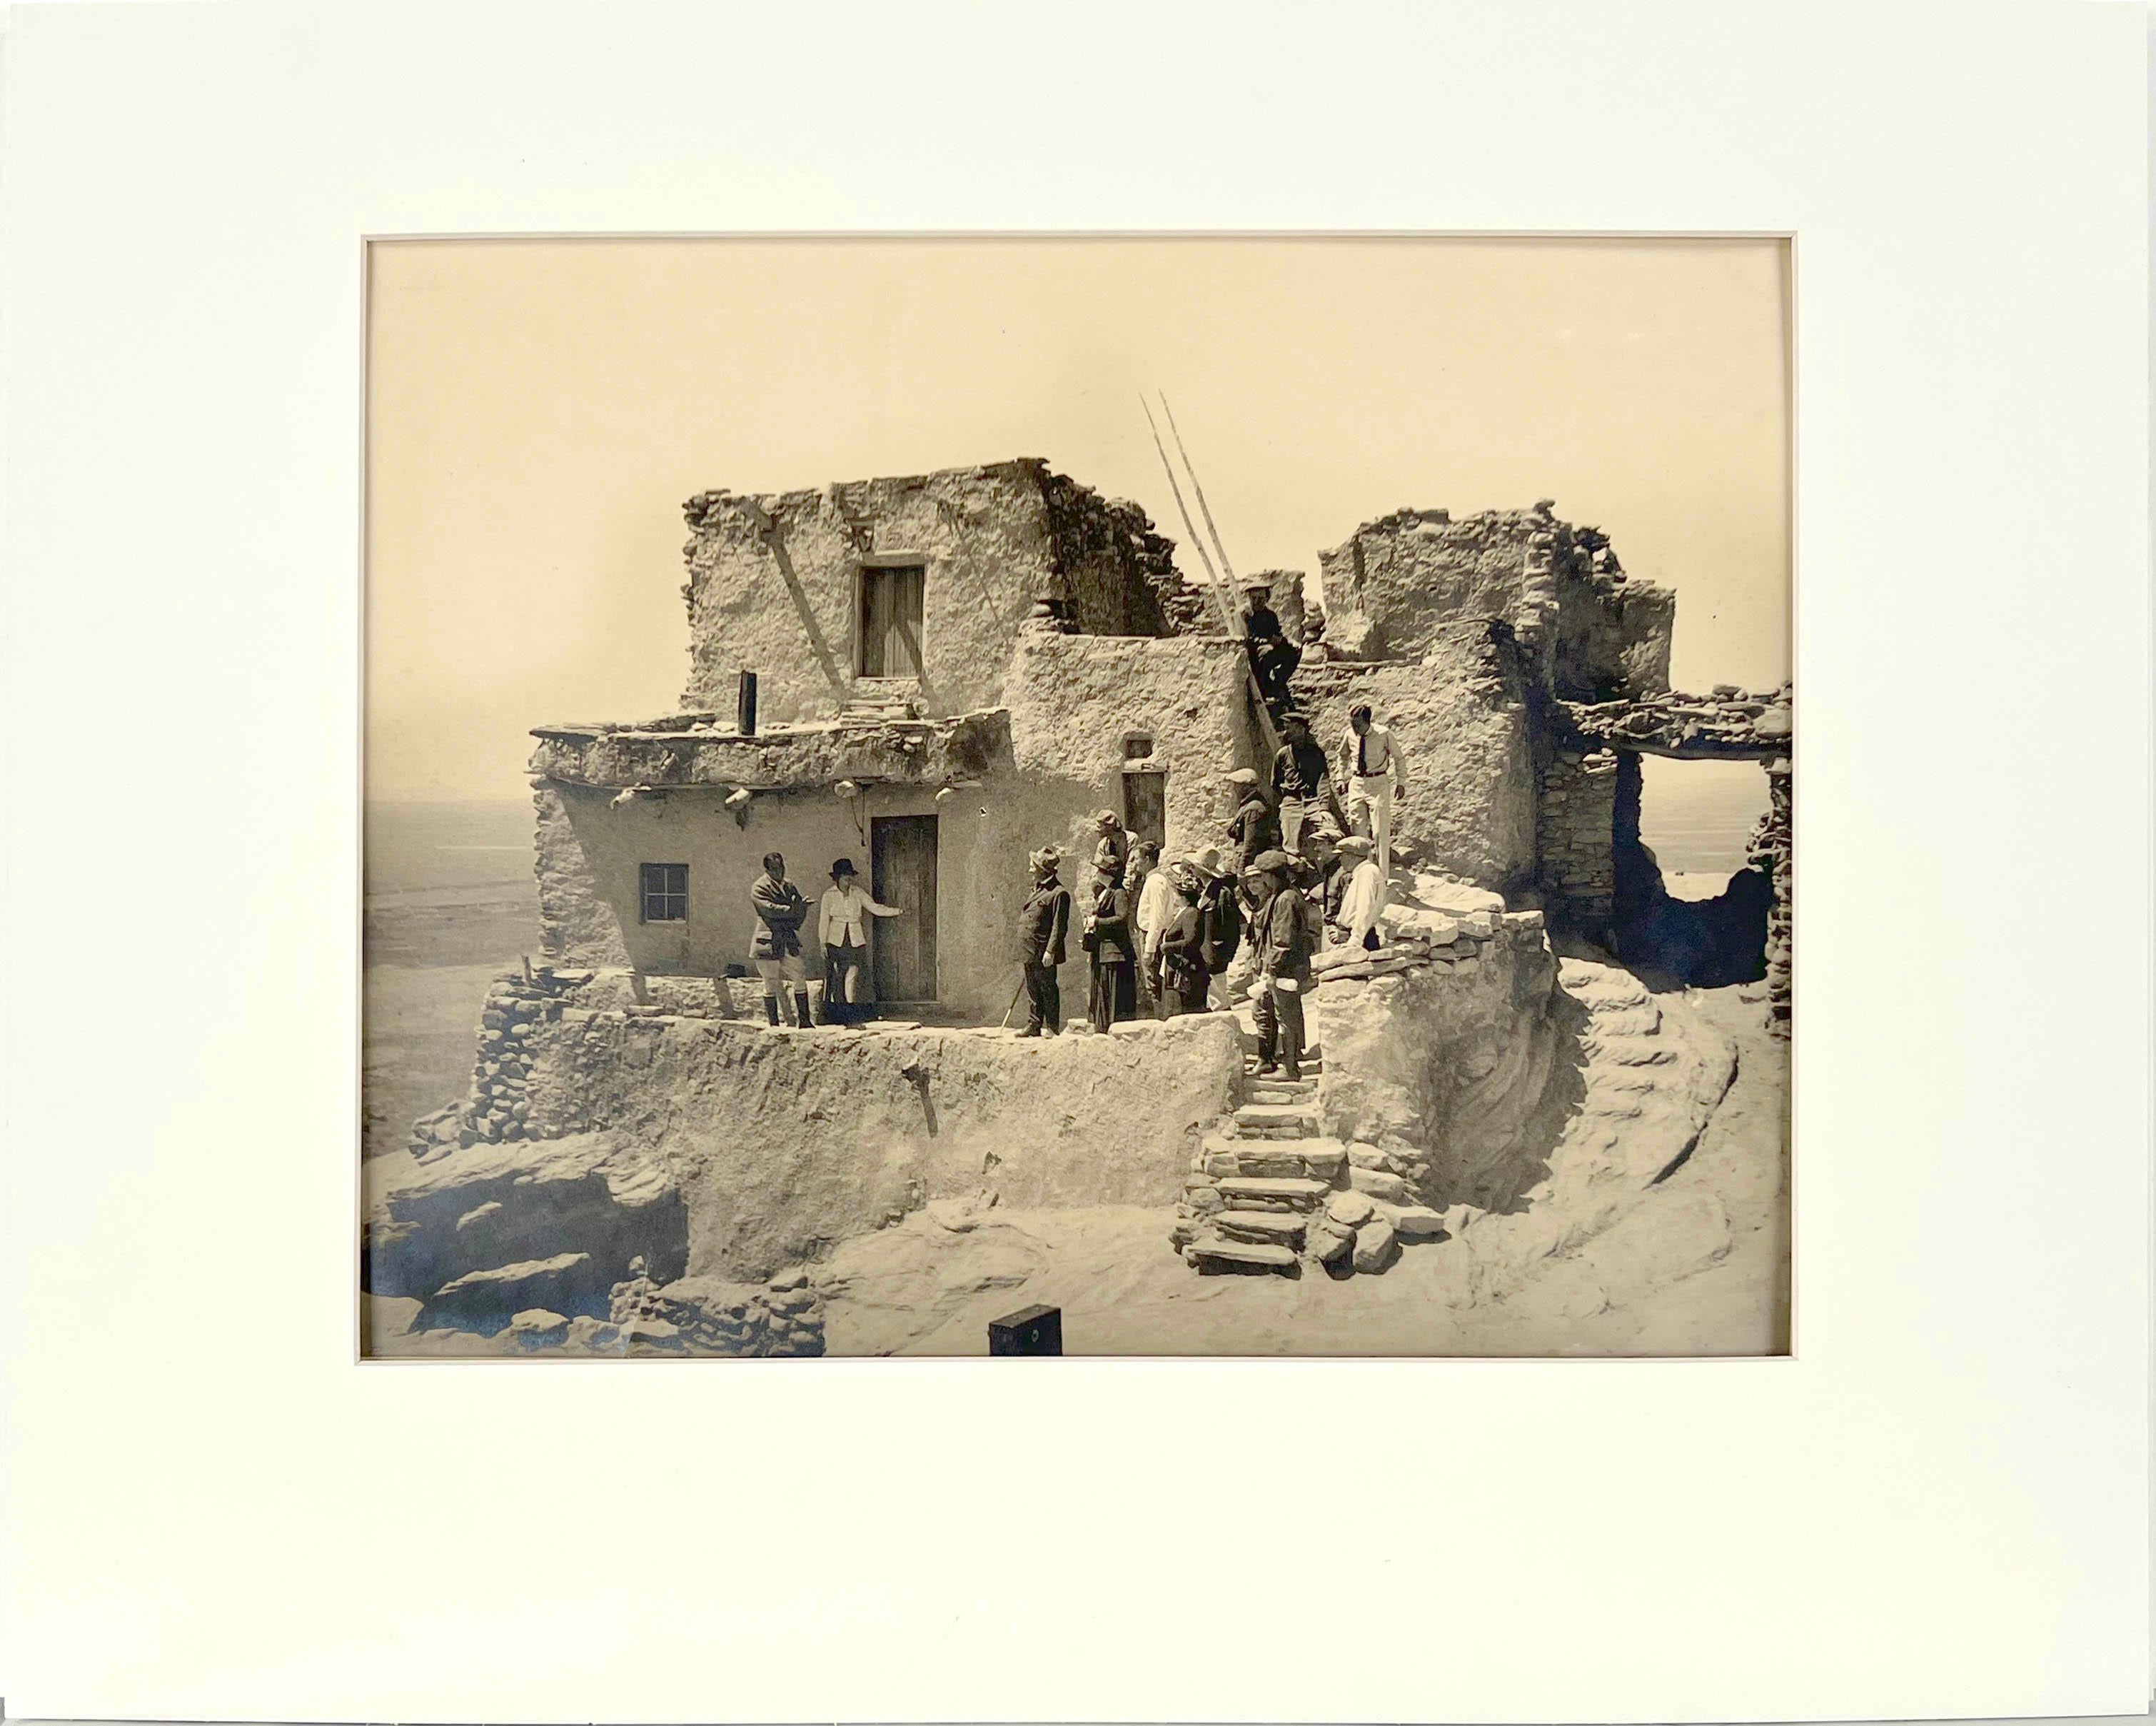 Mary Pickford Douglas Fairbanks at Walpi First Mesa Hopi Village - Photographie de 1920